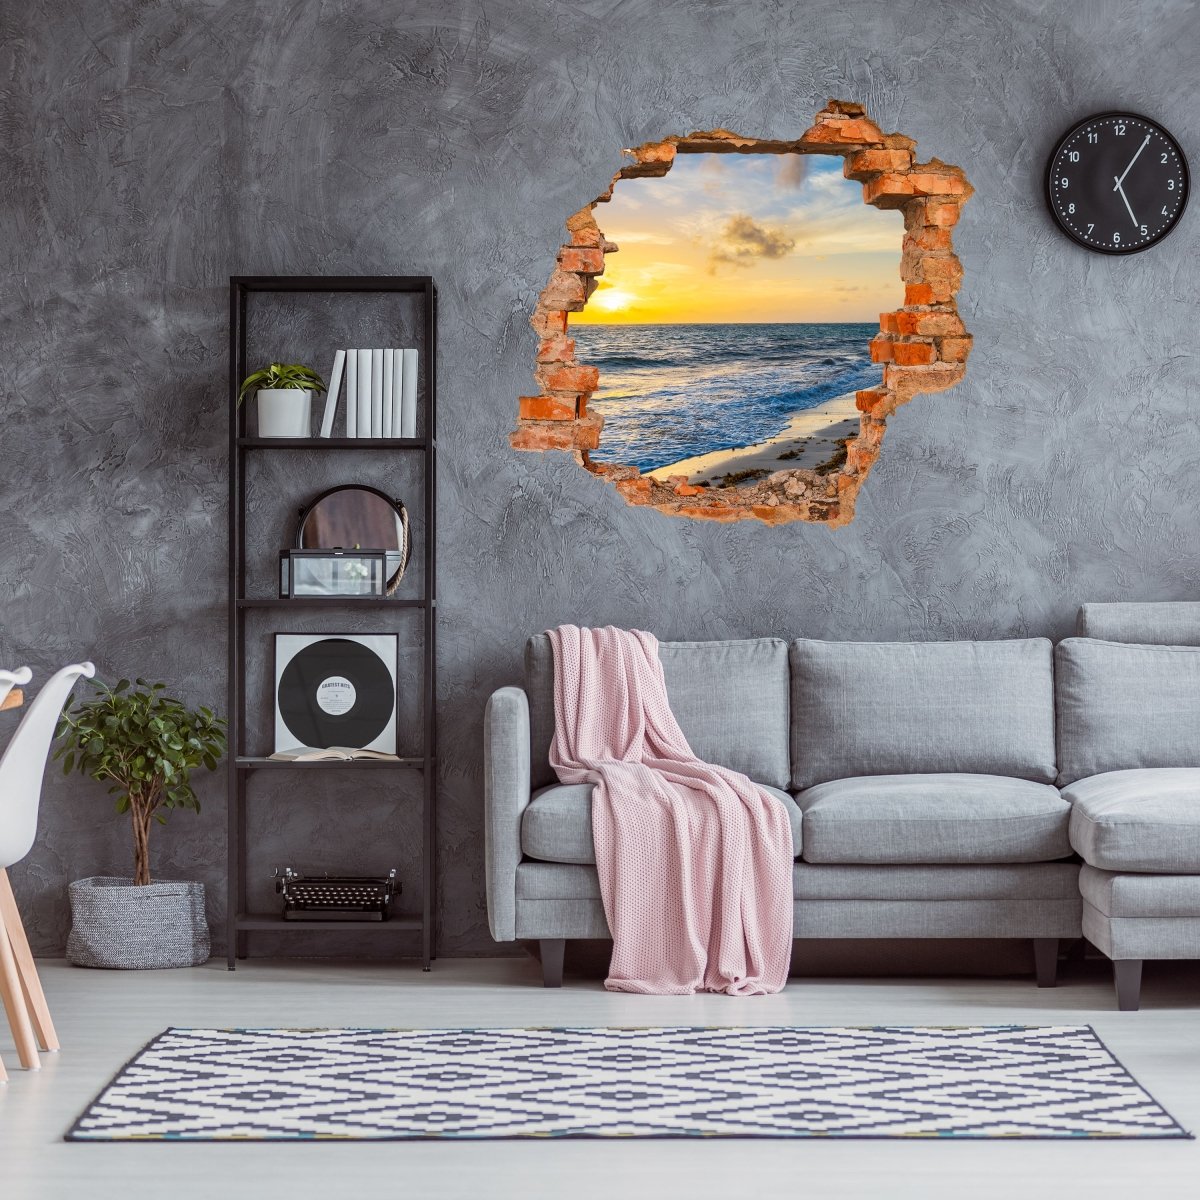 3D wall sticker beach in sunset, sea, sun - Wall Decal M1203